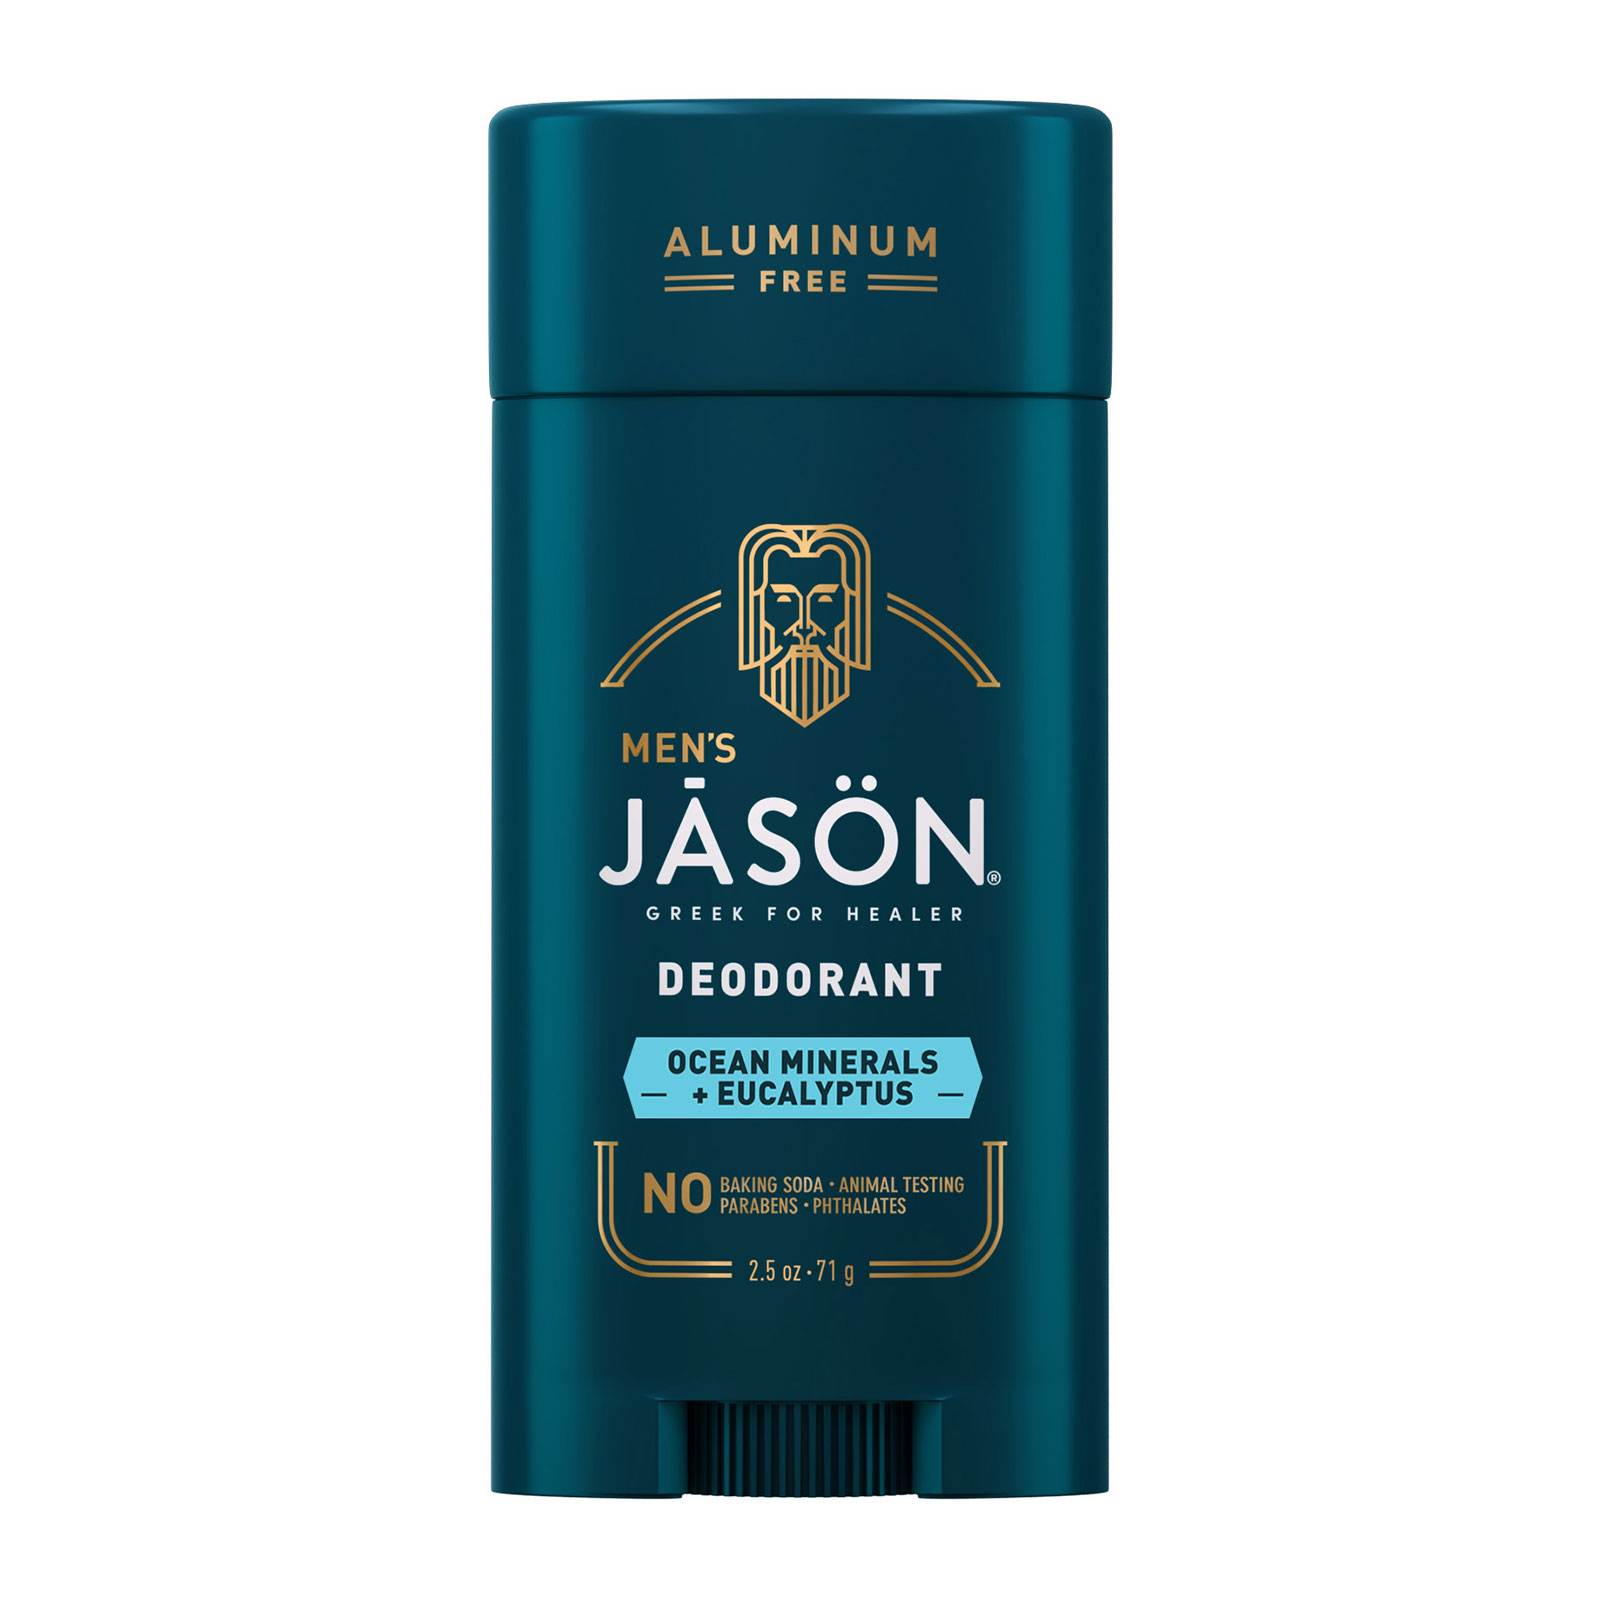 JASON Men's Ocean Minerals and Eucalyptus Deodorant Stick 71g